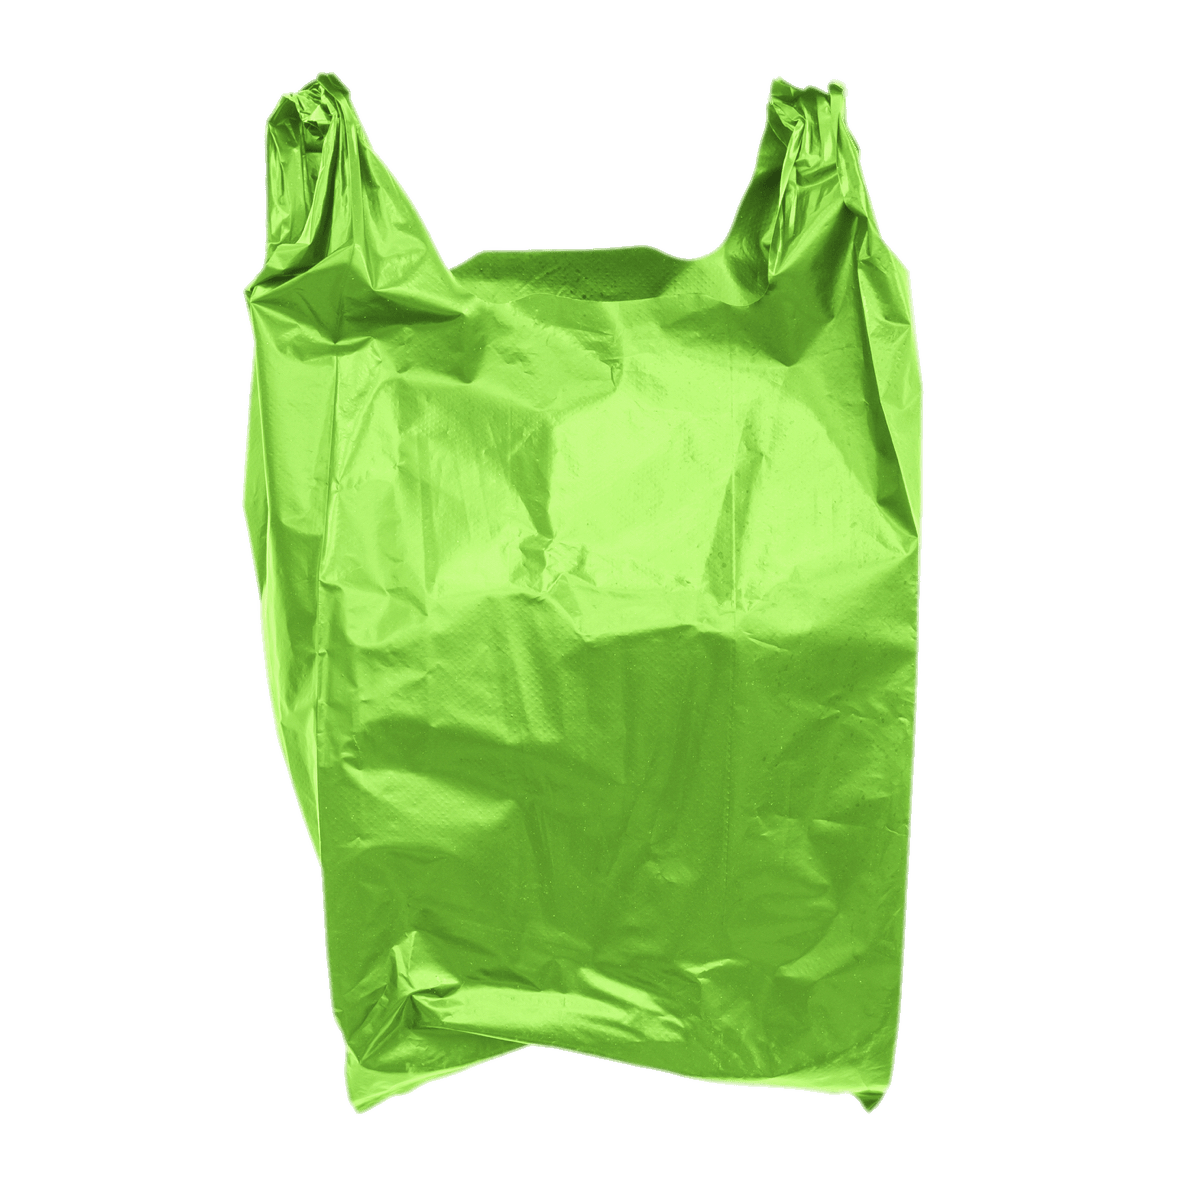 Plastic Bag PNG Photos